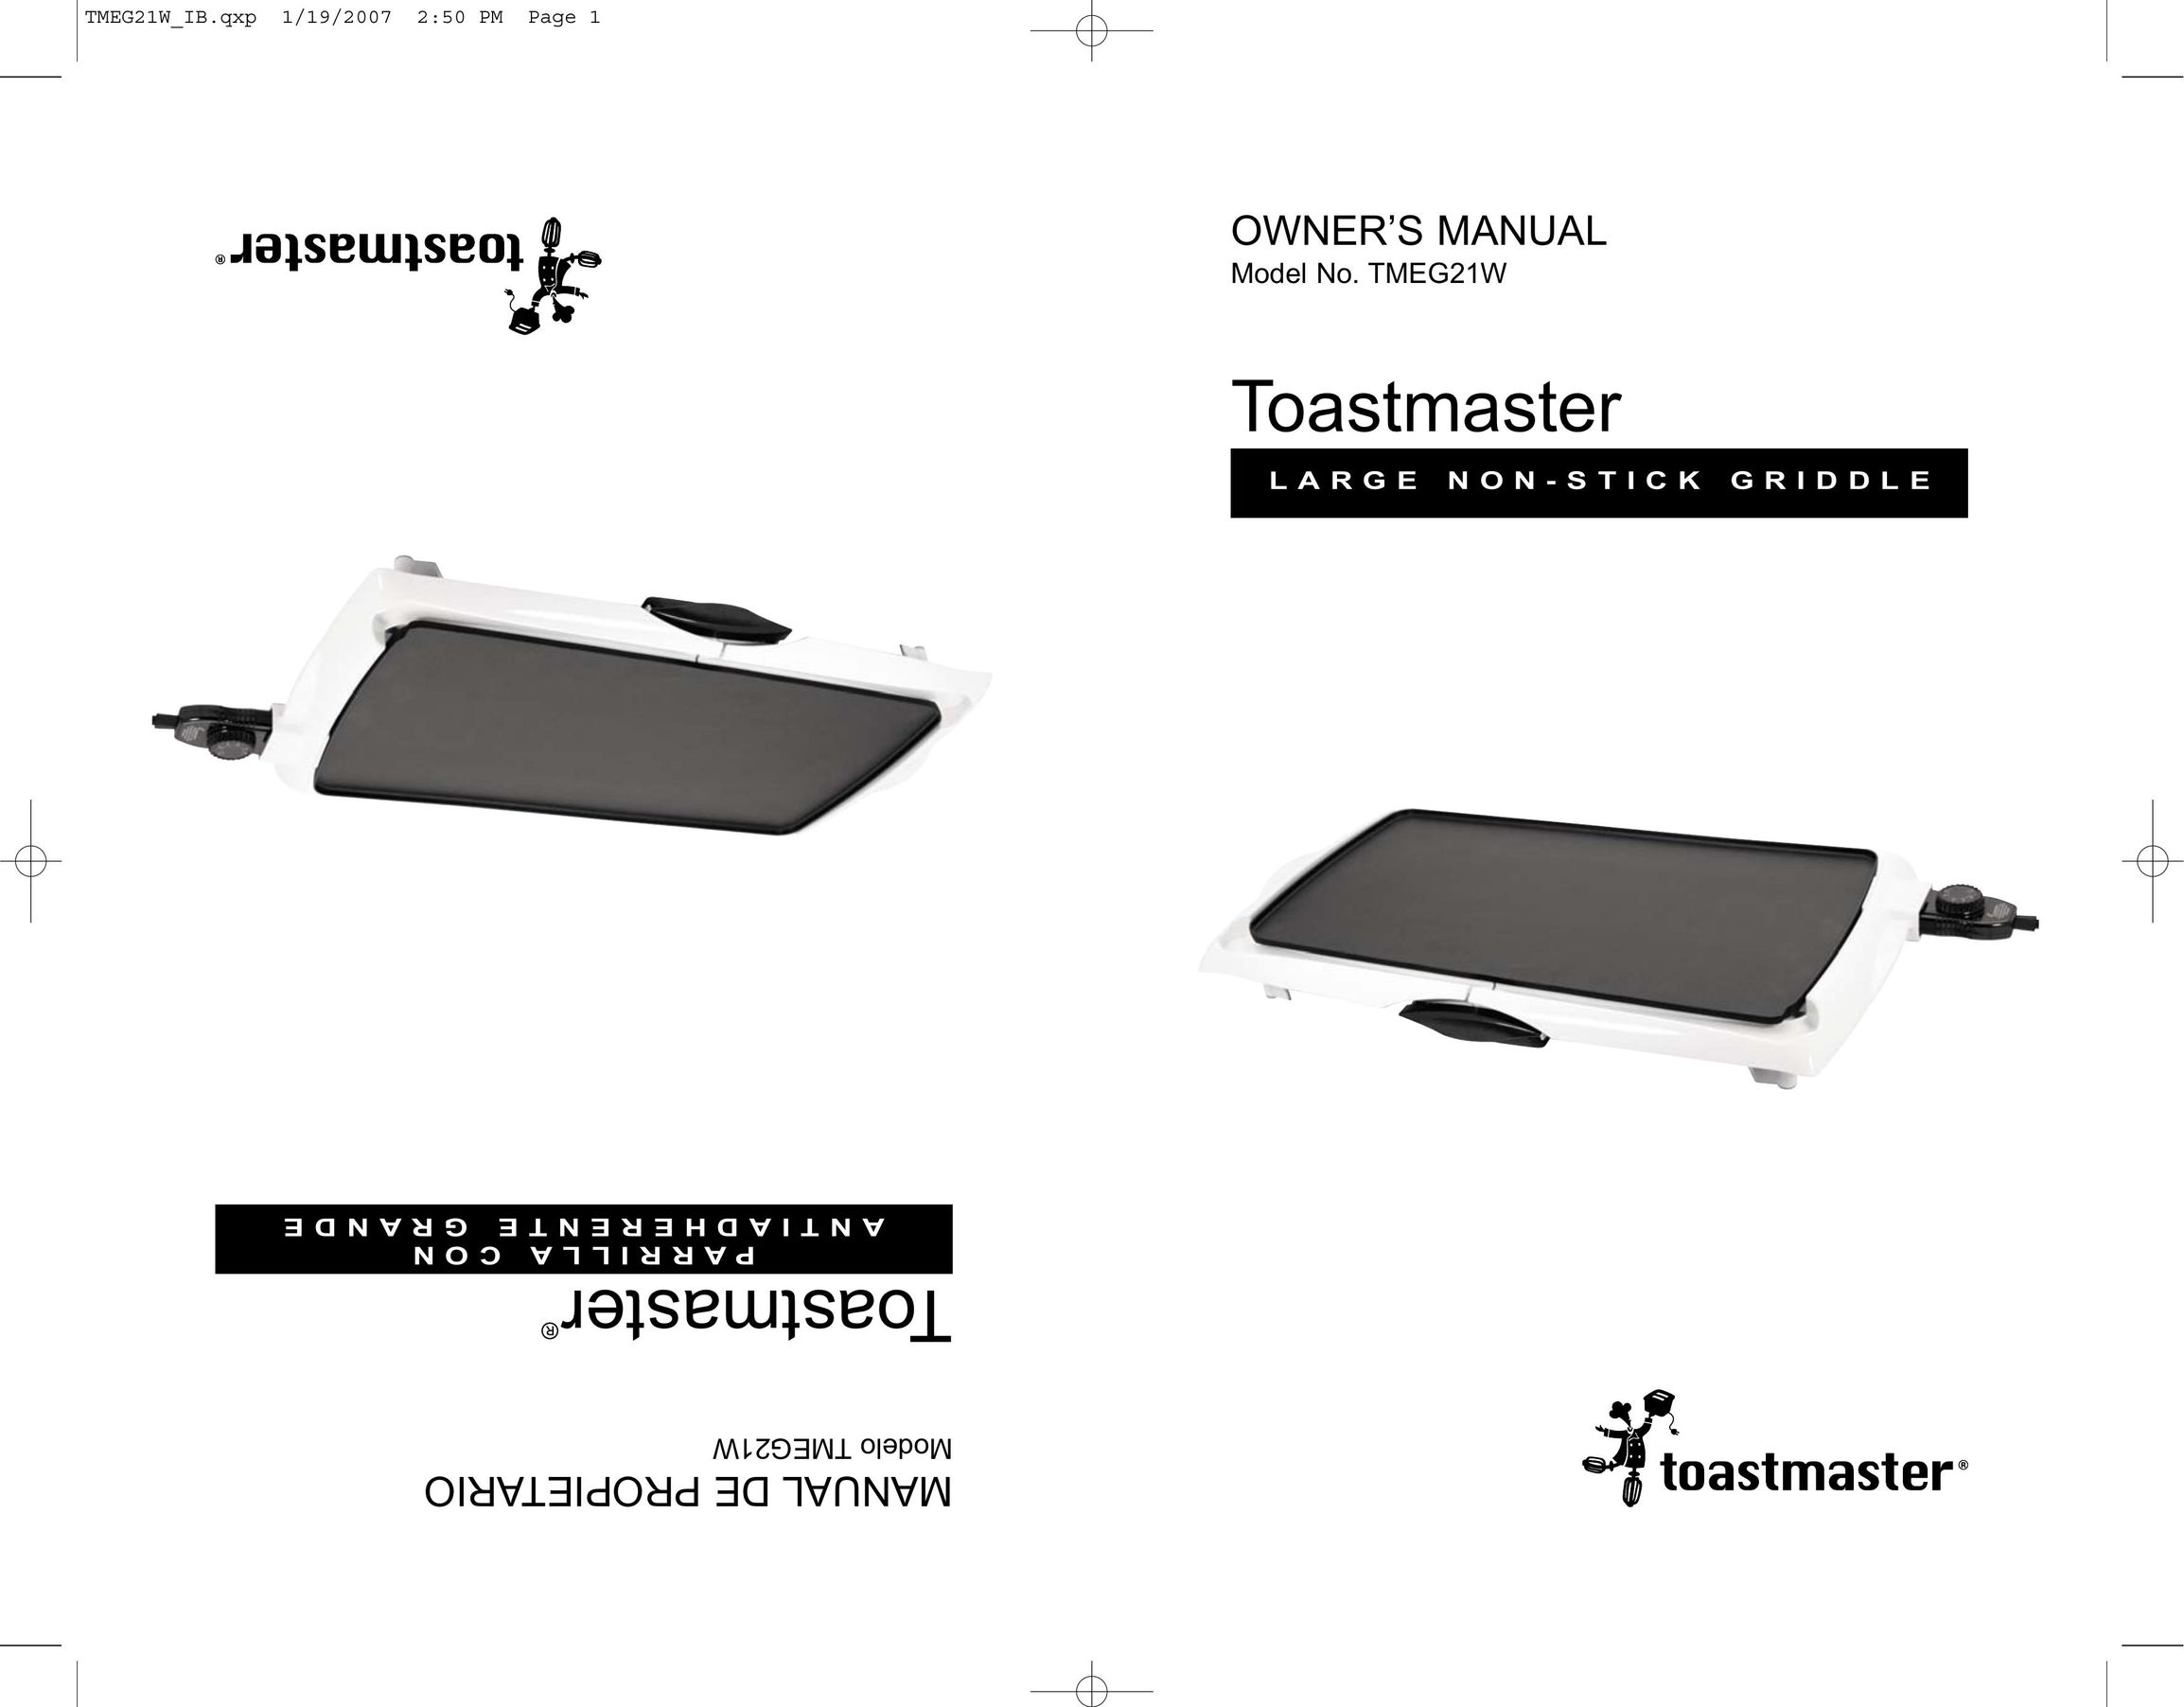 Toastmaster TMEG21W Griddle User Manual